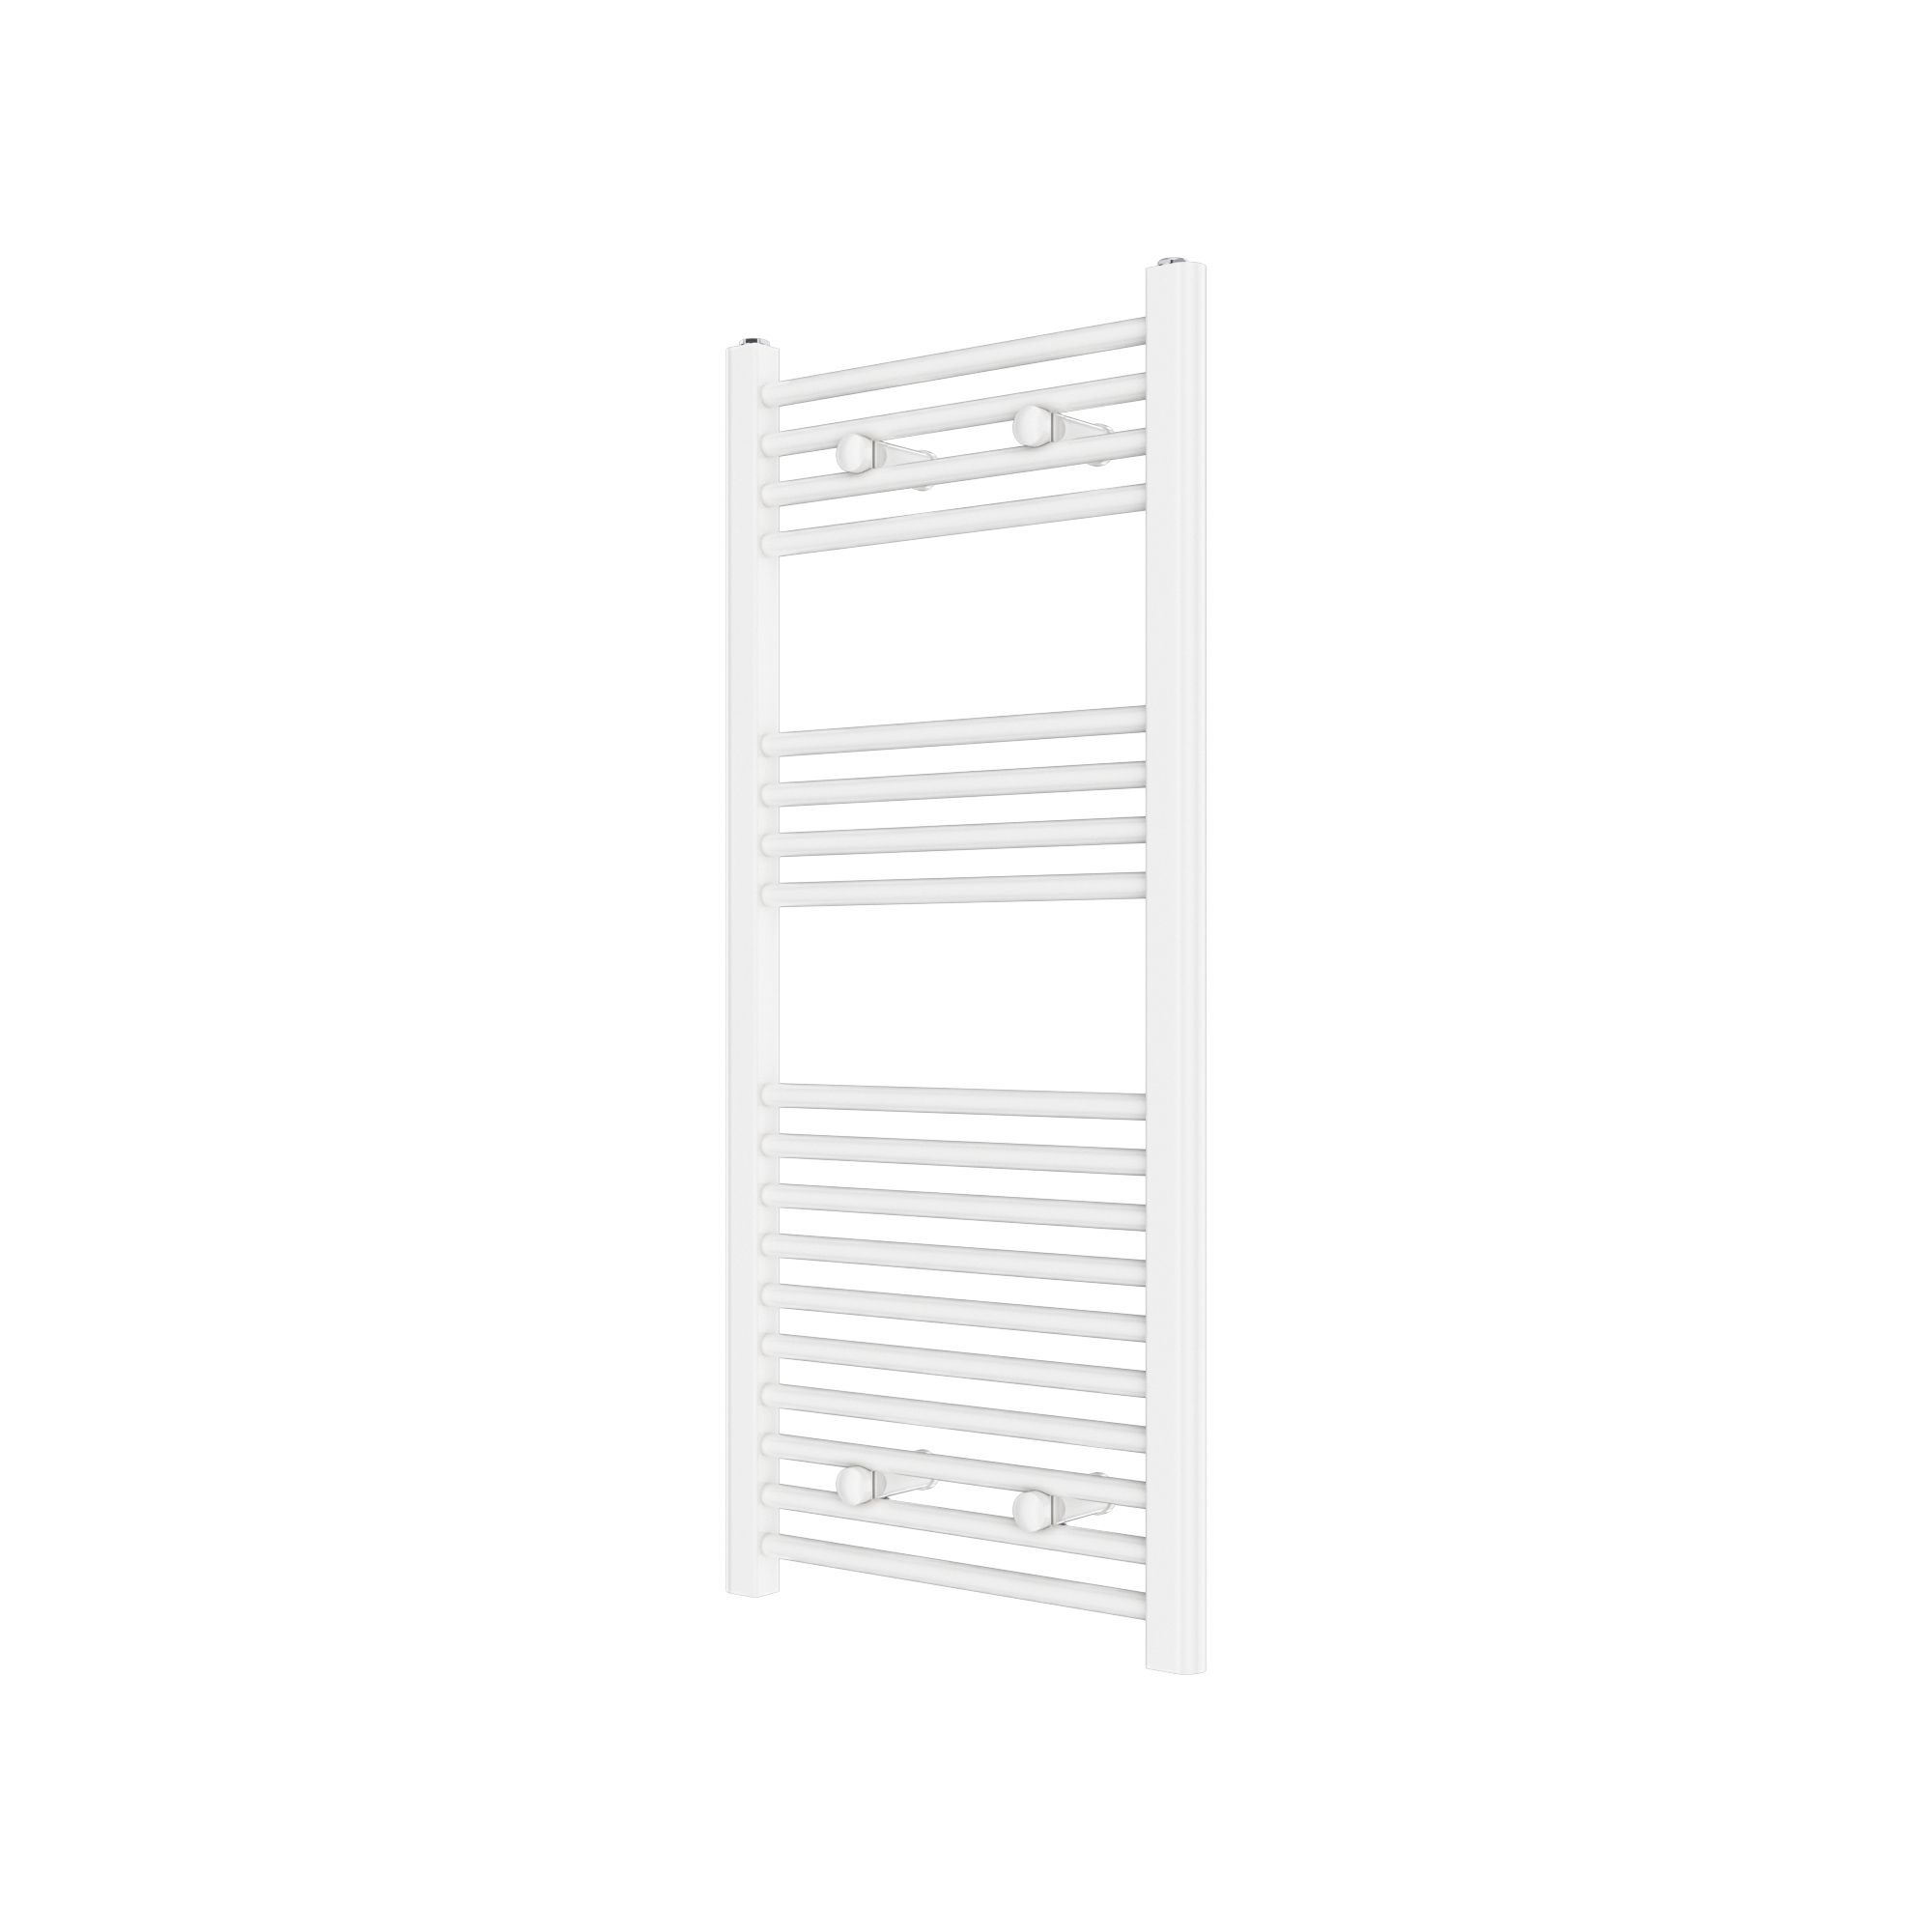 Flomasta Flat, White Vertical Towel radiator (W)450mm x (H)1000mm